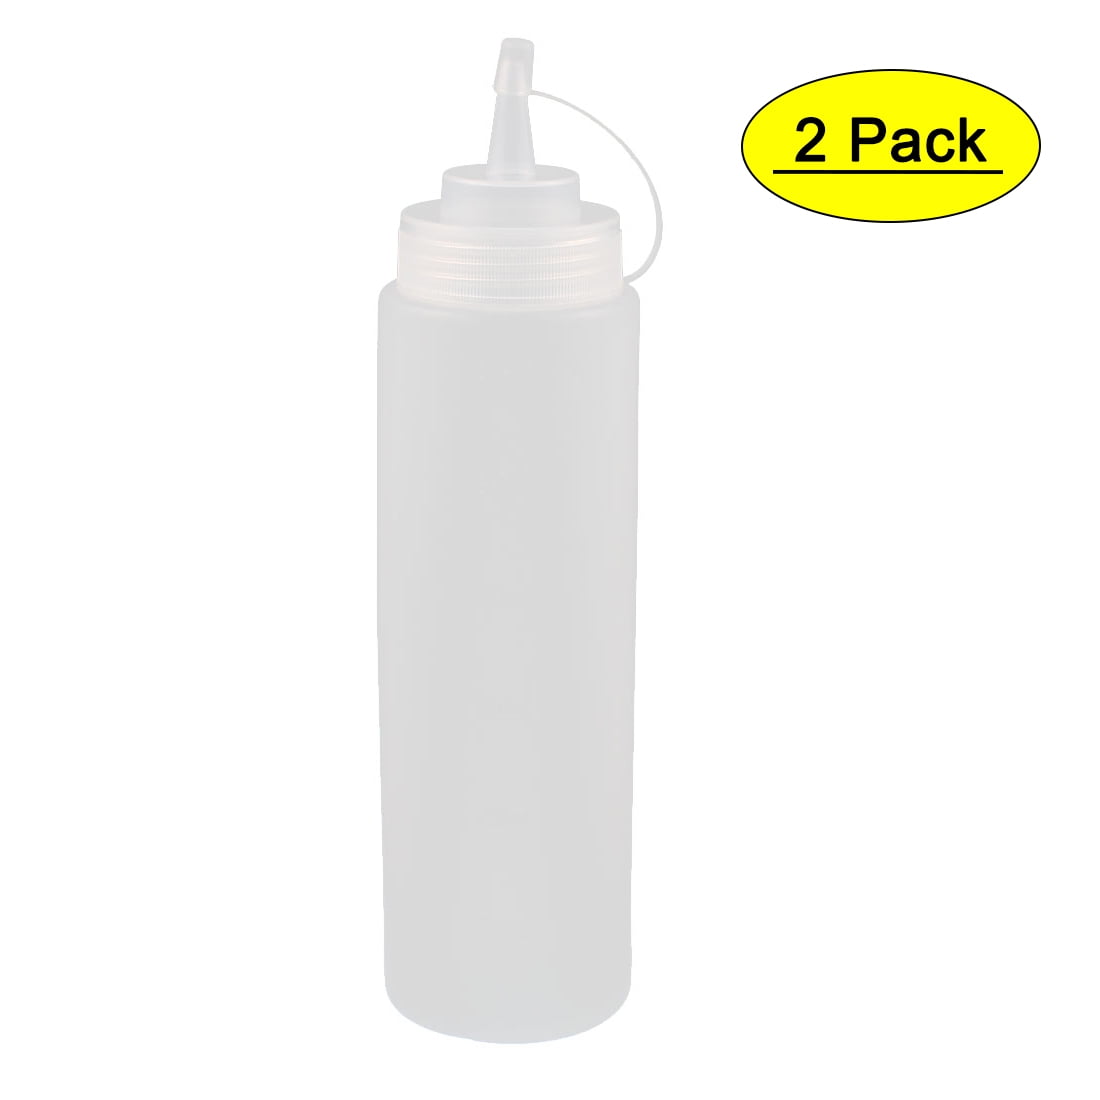 100ml Small Squeeze Bottle, 10pcs Glue Applicator Bottle Mini Squirt Bottle with Cap for Gun Oil Glue, White